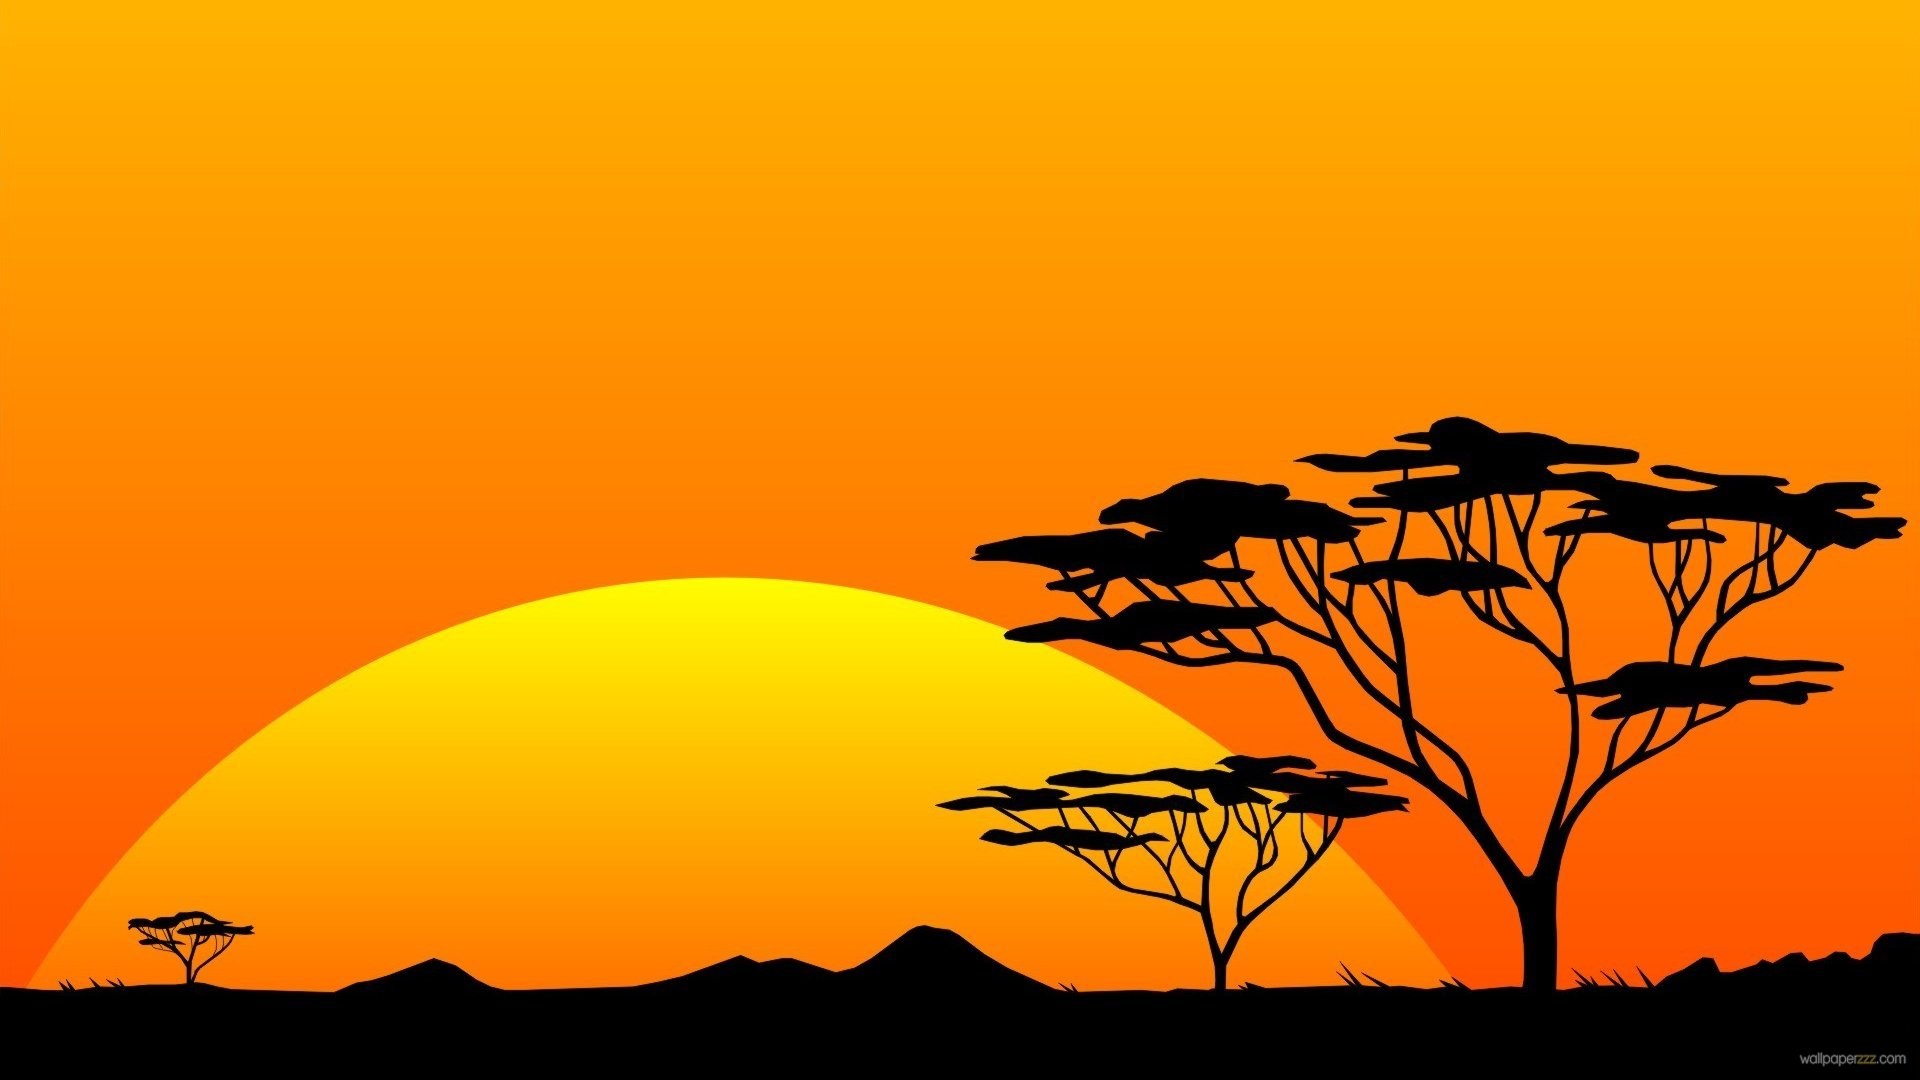 Scenery Safari Hires Sun Sunrise Africa wallpaper HD free